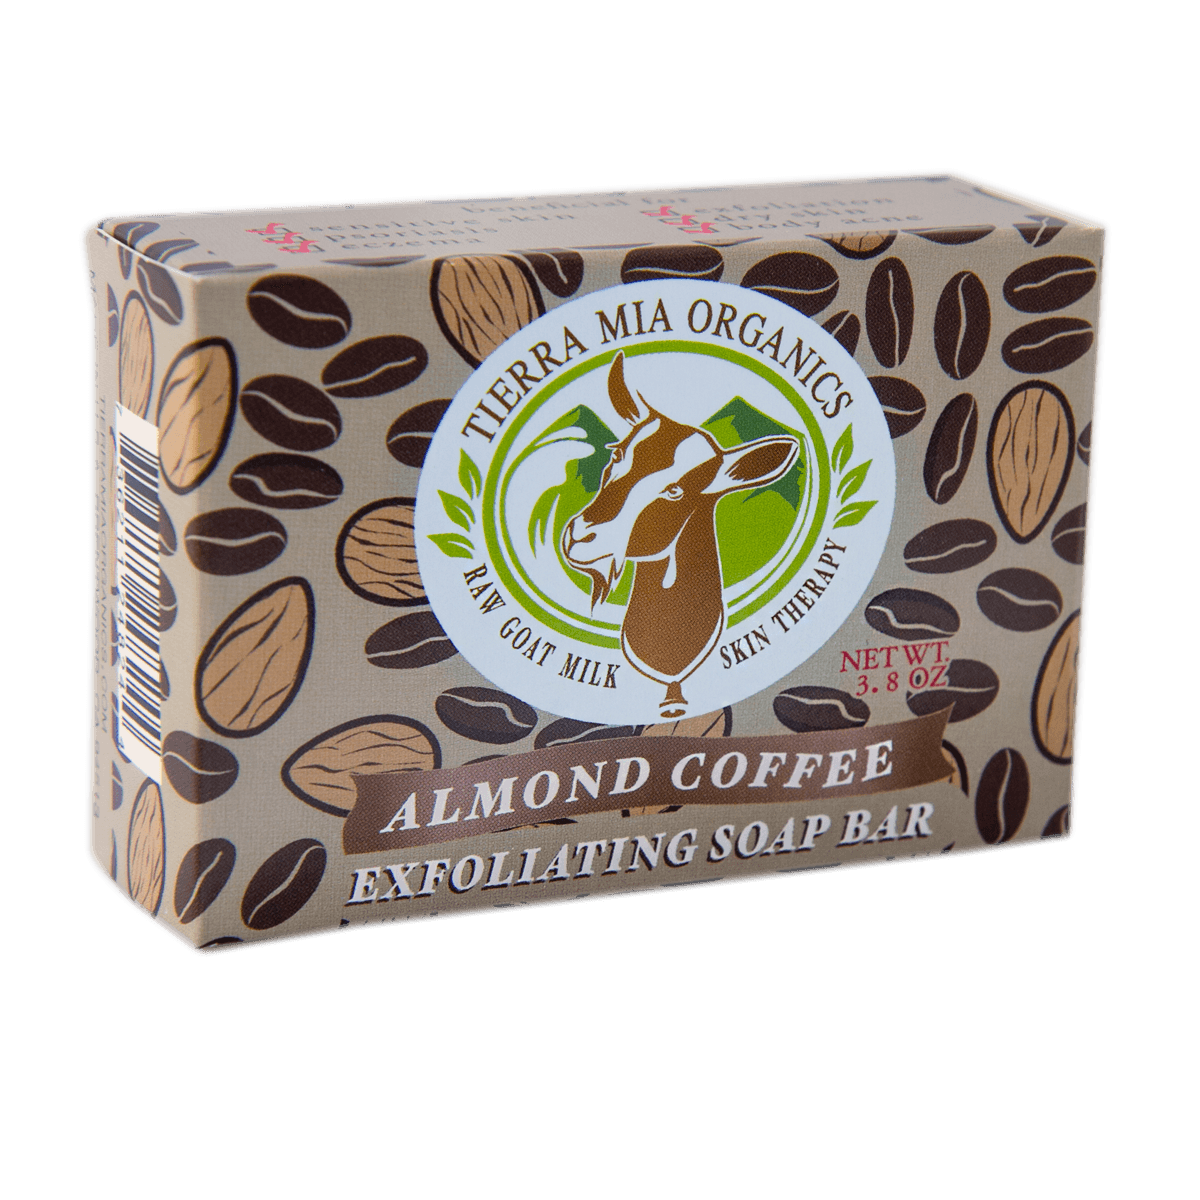 Almond Coffe  Exfoliating Soap Bar - Tierra Mia Organics